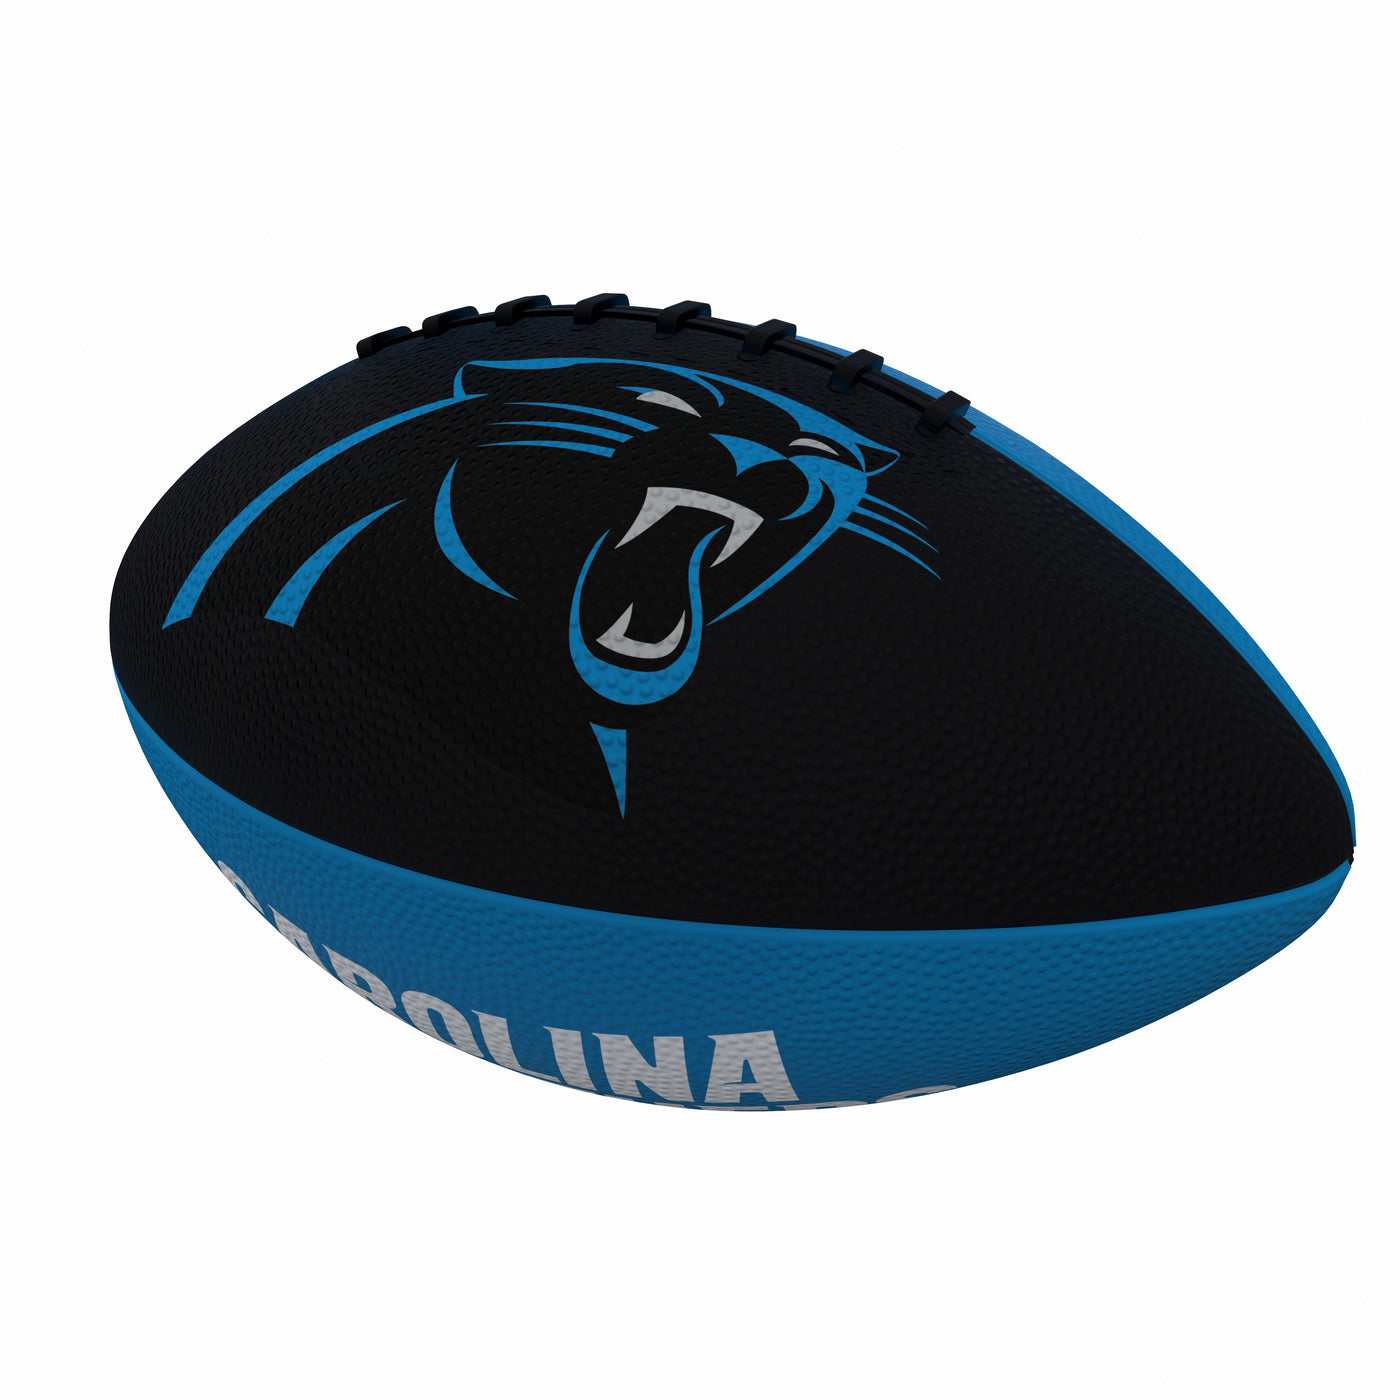 Carolina Panthers Pinwheel Logo Junior-Size Rubber Football